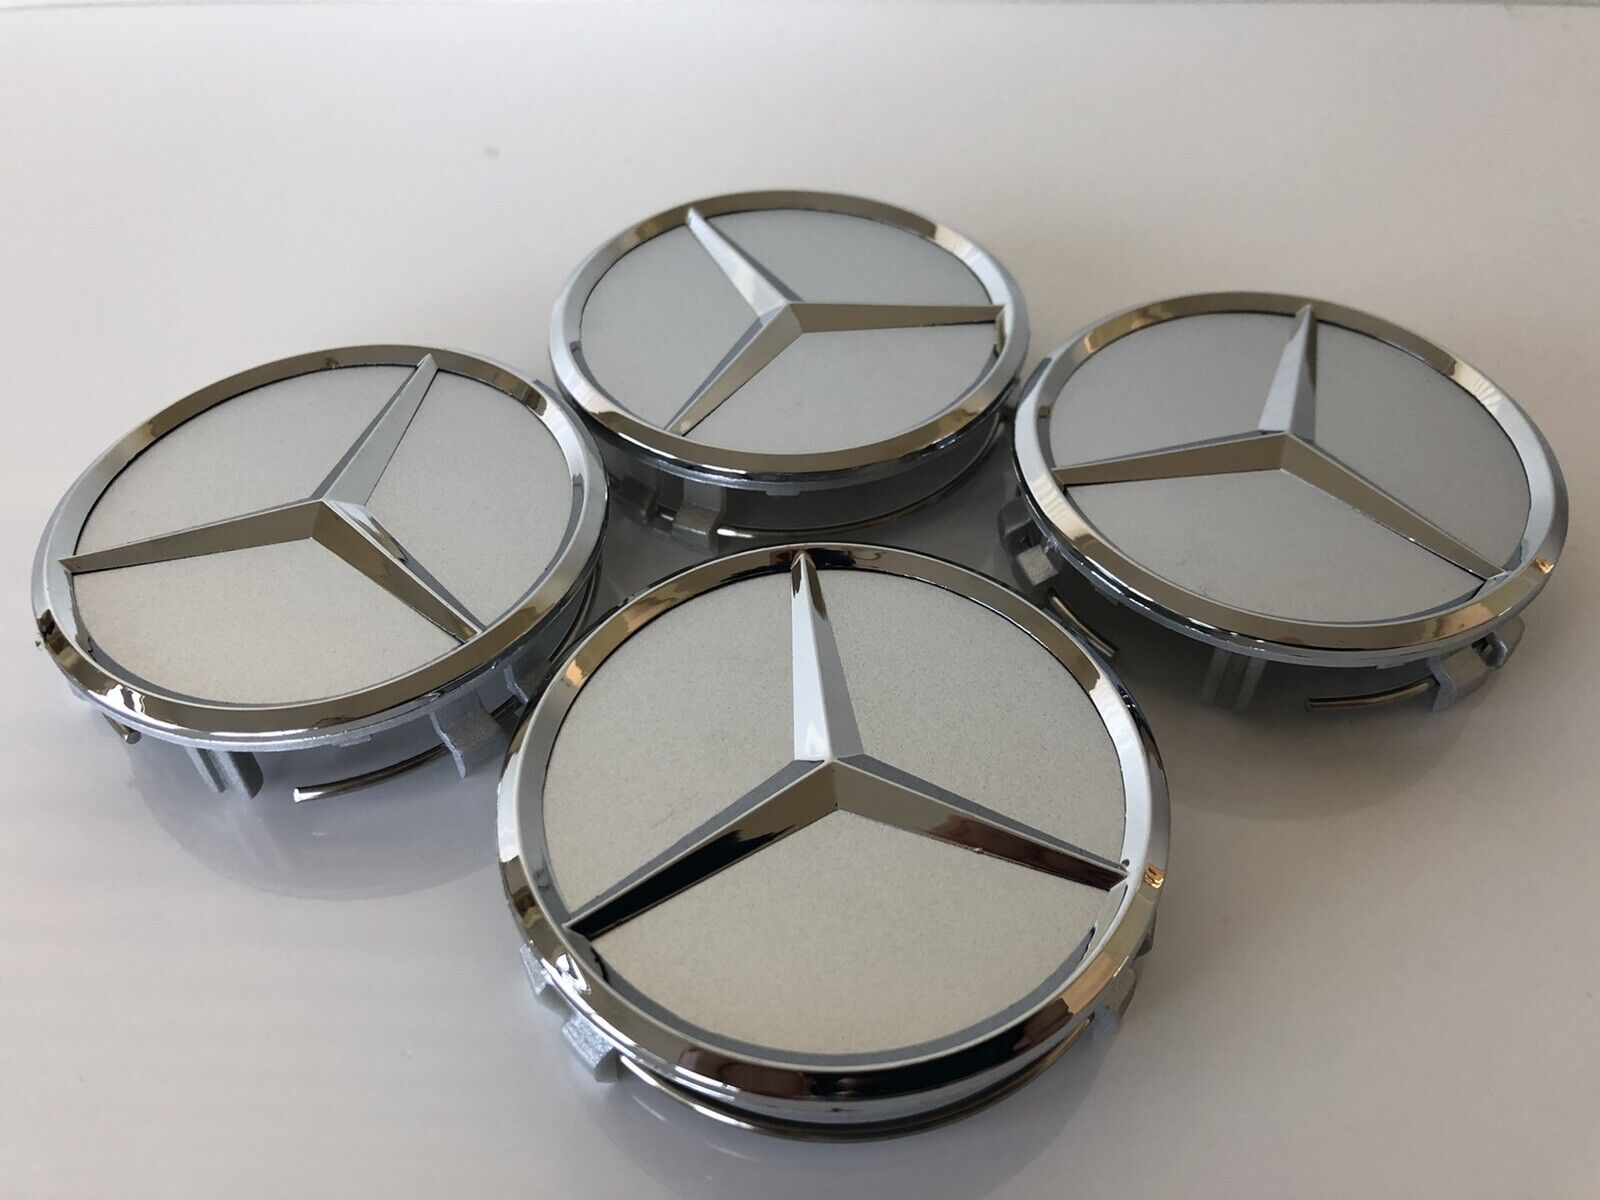  4PC Fit Mercedes Benz Wheel Center Caps Hub SILVER CHROME Emblem AMG  75mm